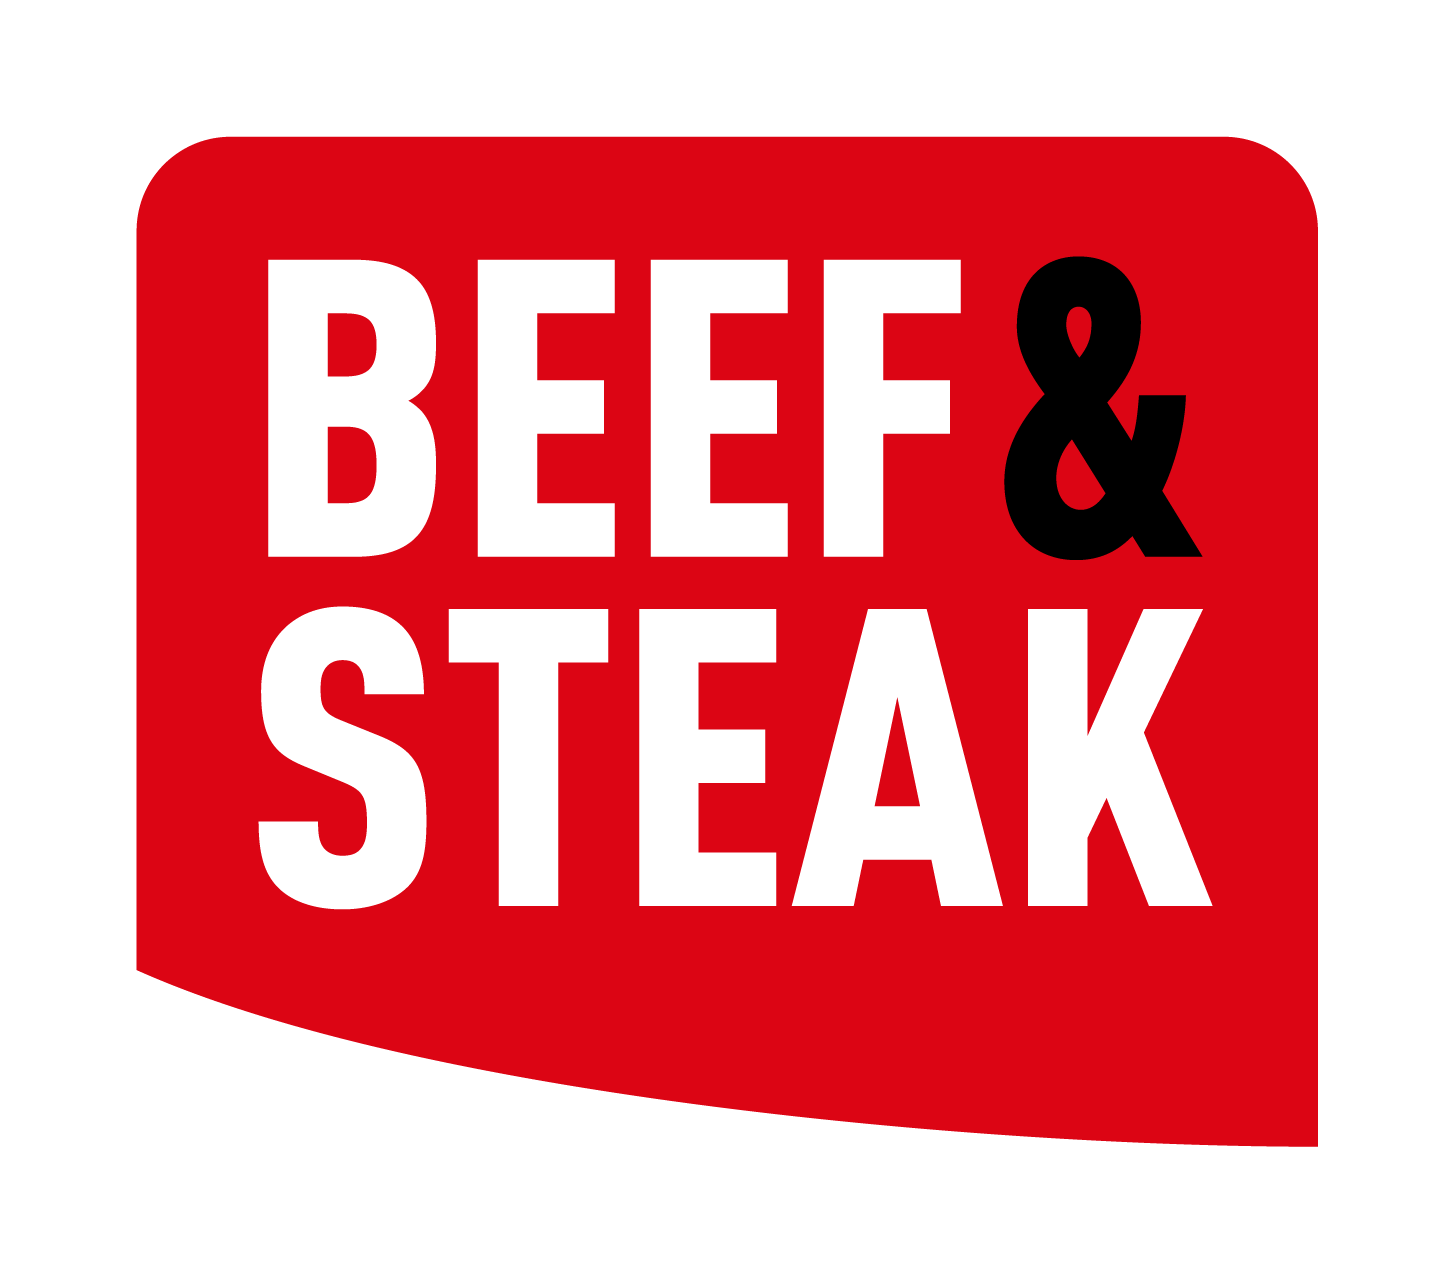 Aberdeen Angus Flank Steak